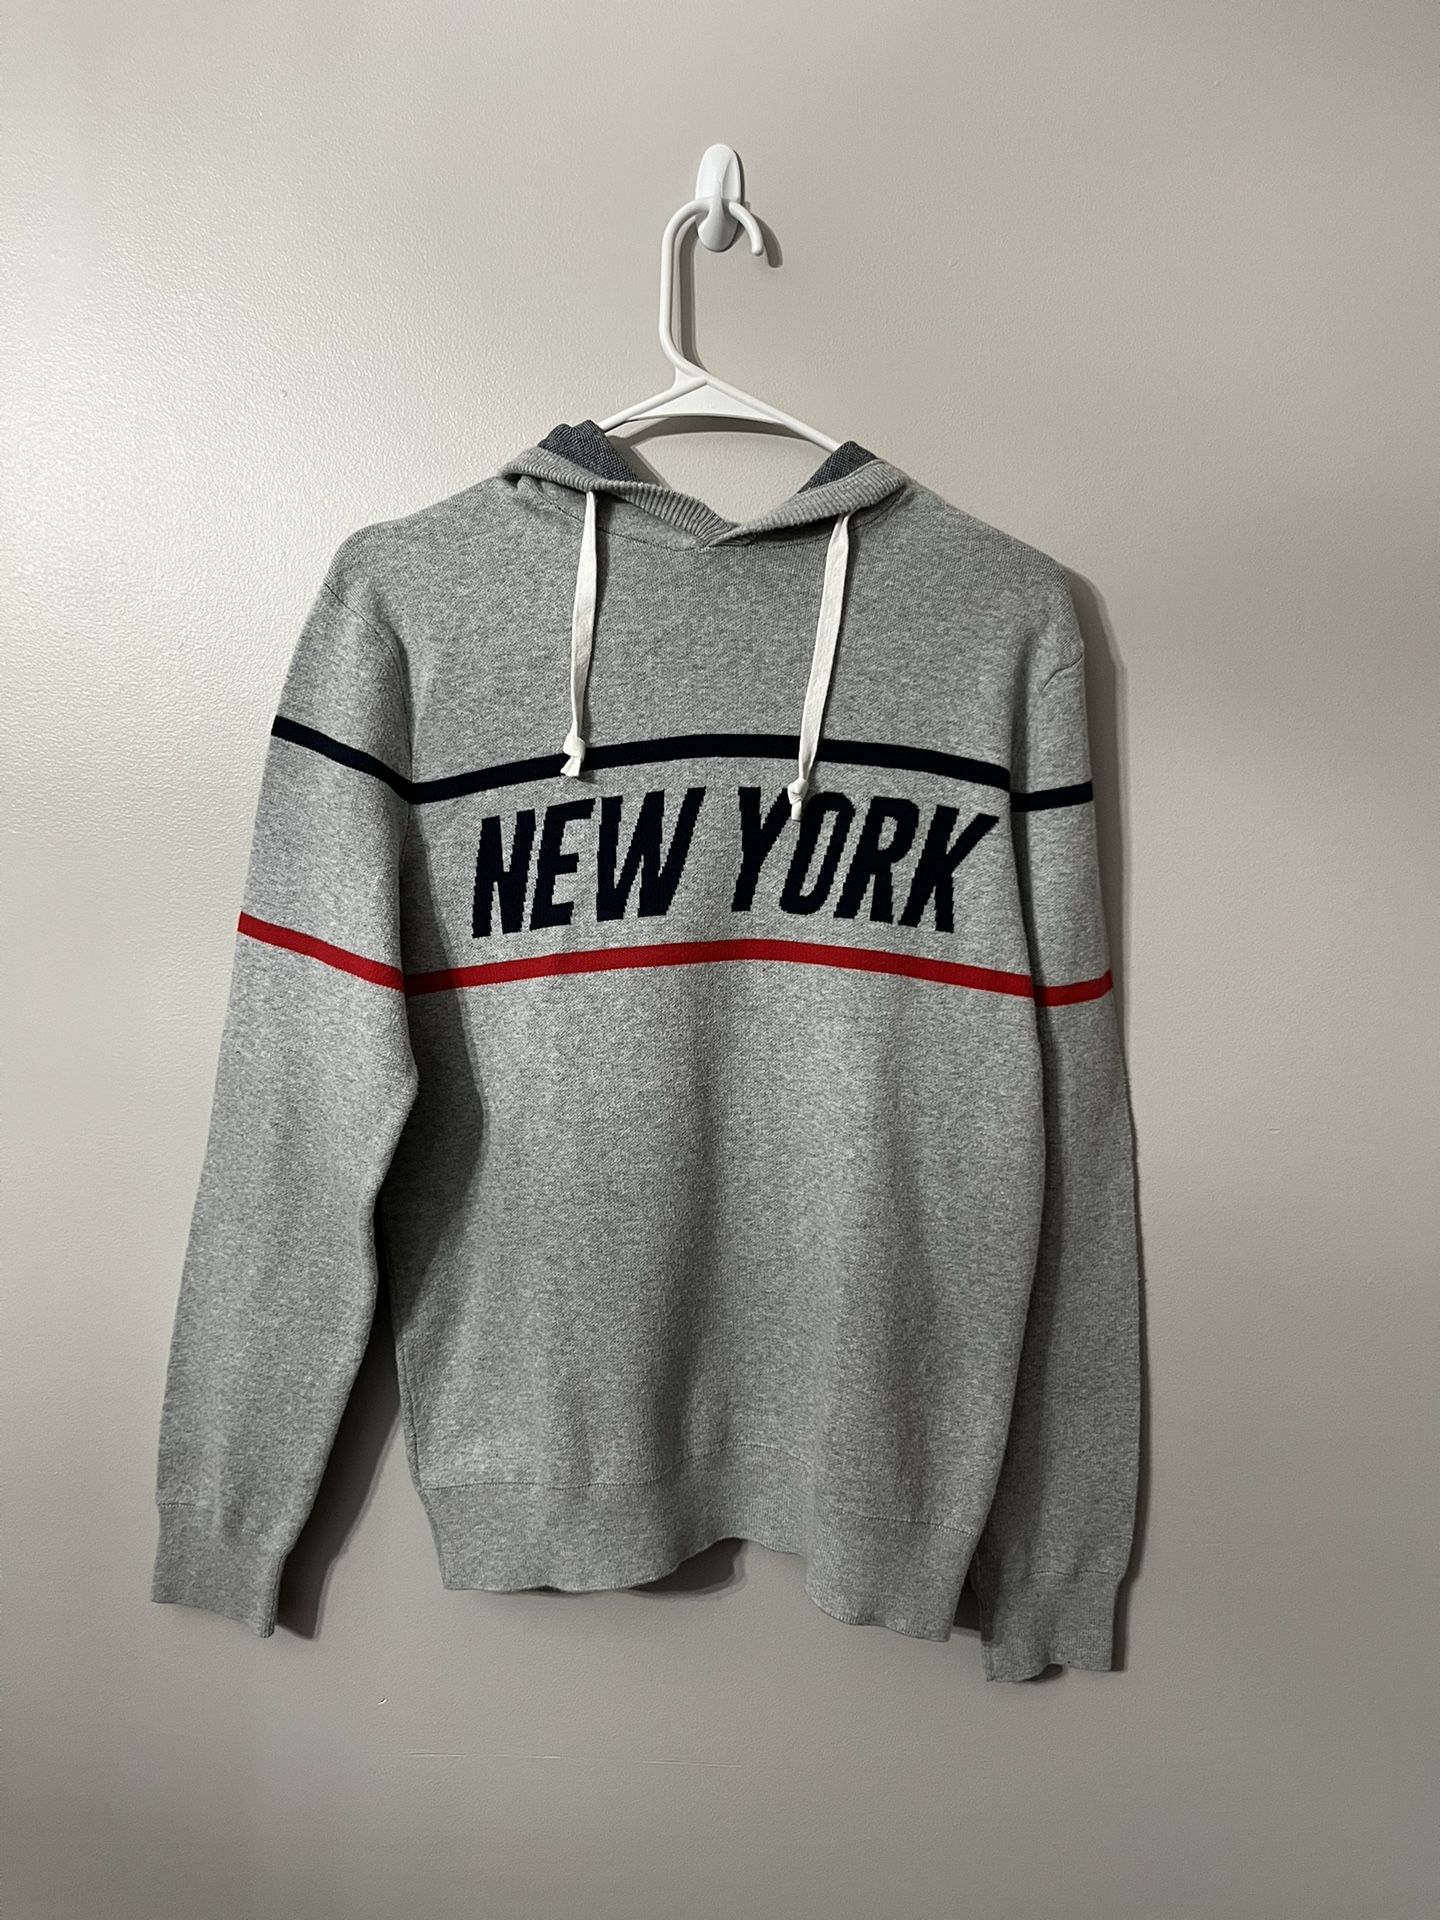 h&m new york hoodie